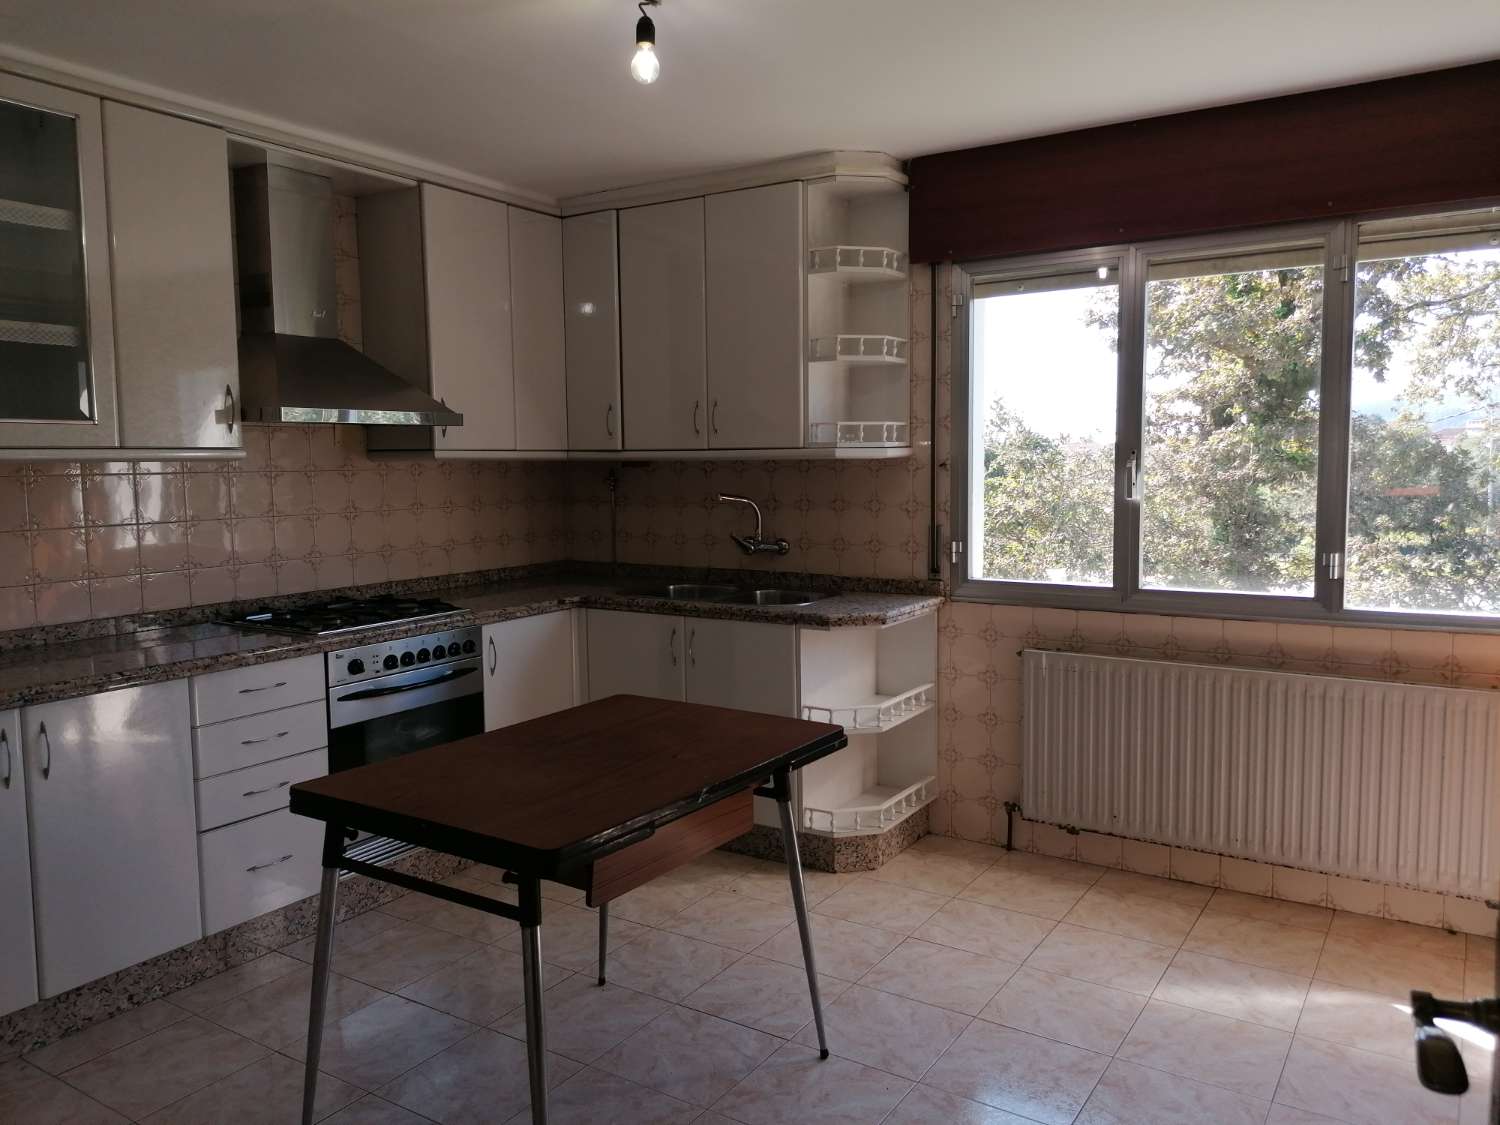 Pontevedra: A7134: Casa con finca en venta a 4 kms de Pontevedra...